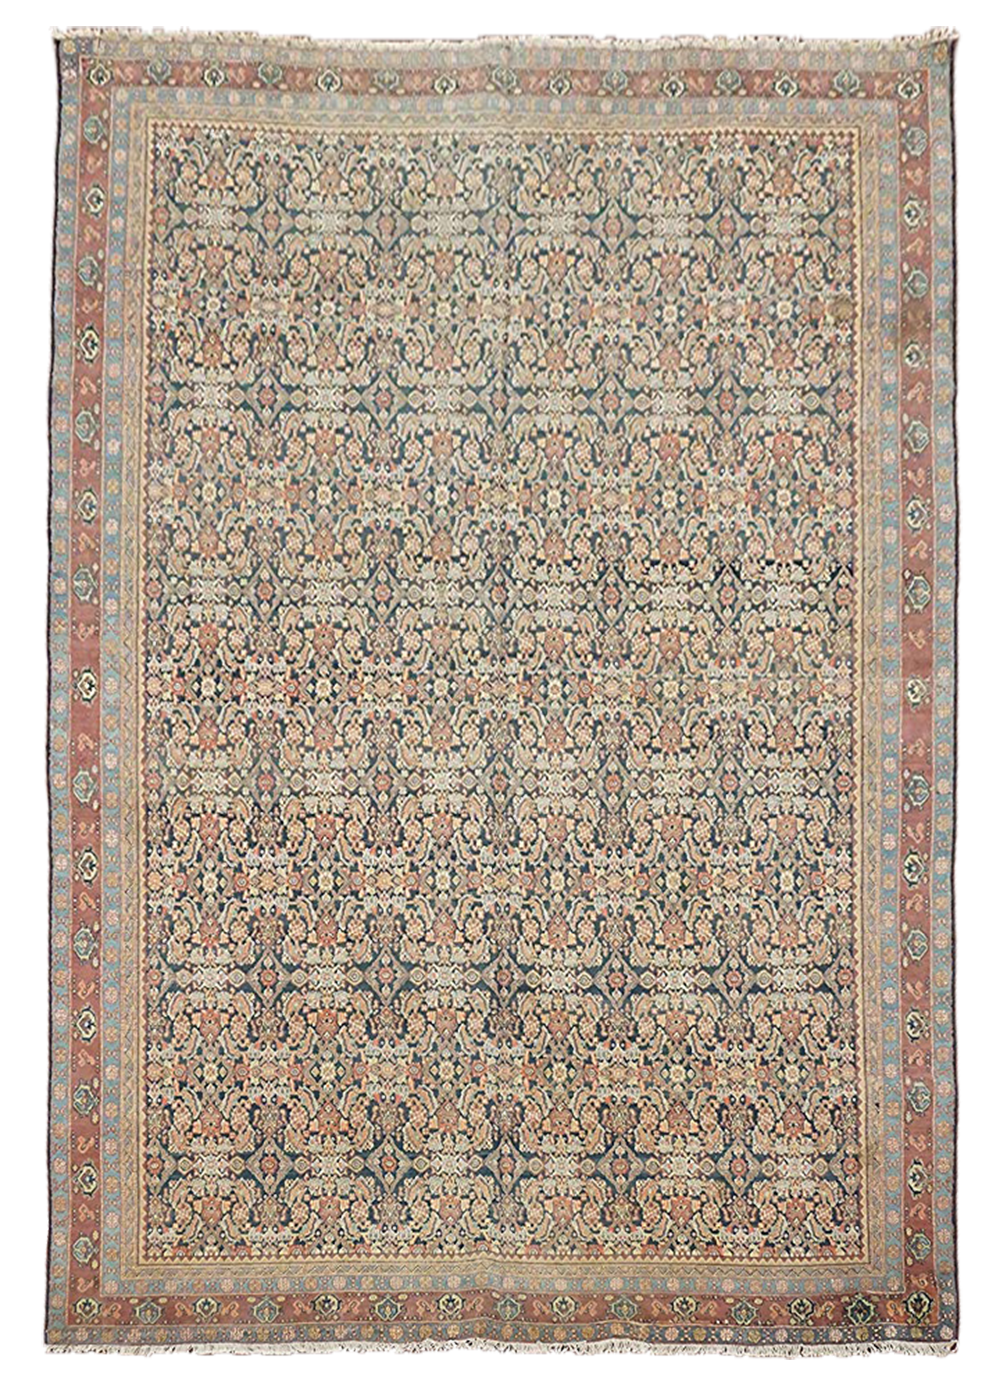 6X9 Fine Antique Agra Herati Cotton Rug, circa 1900